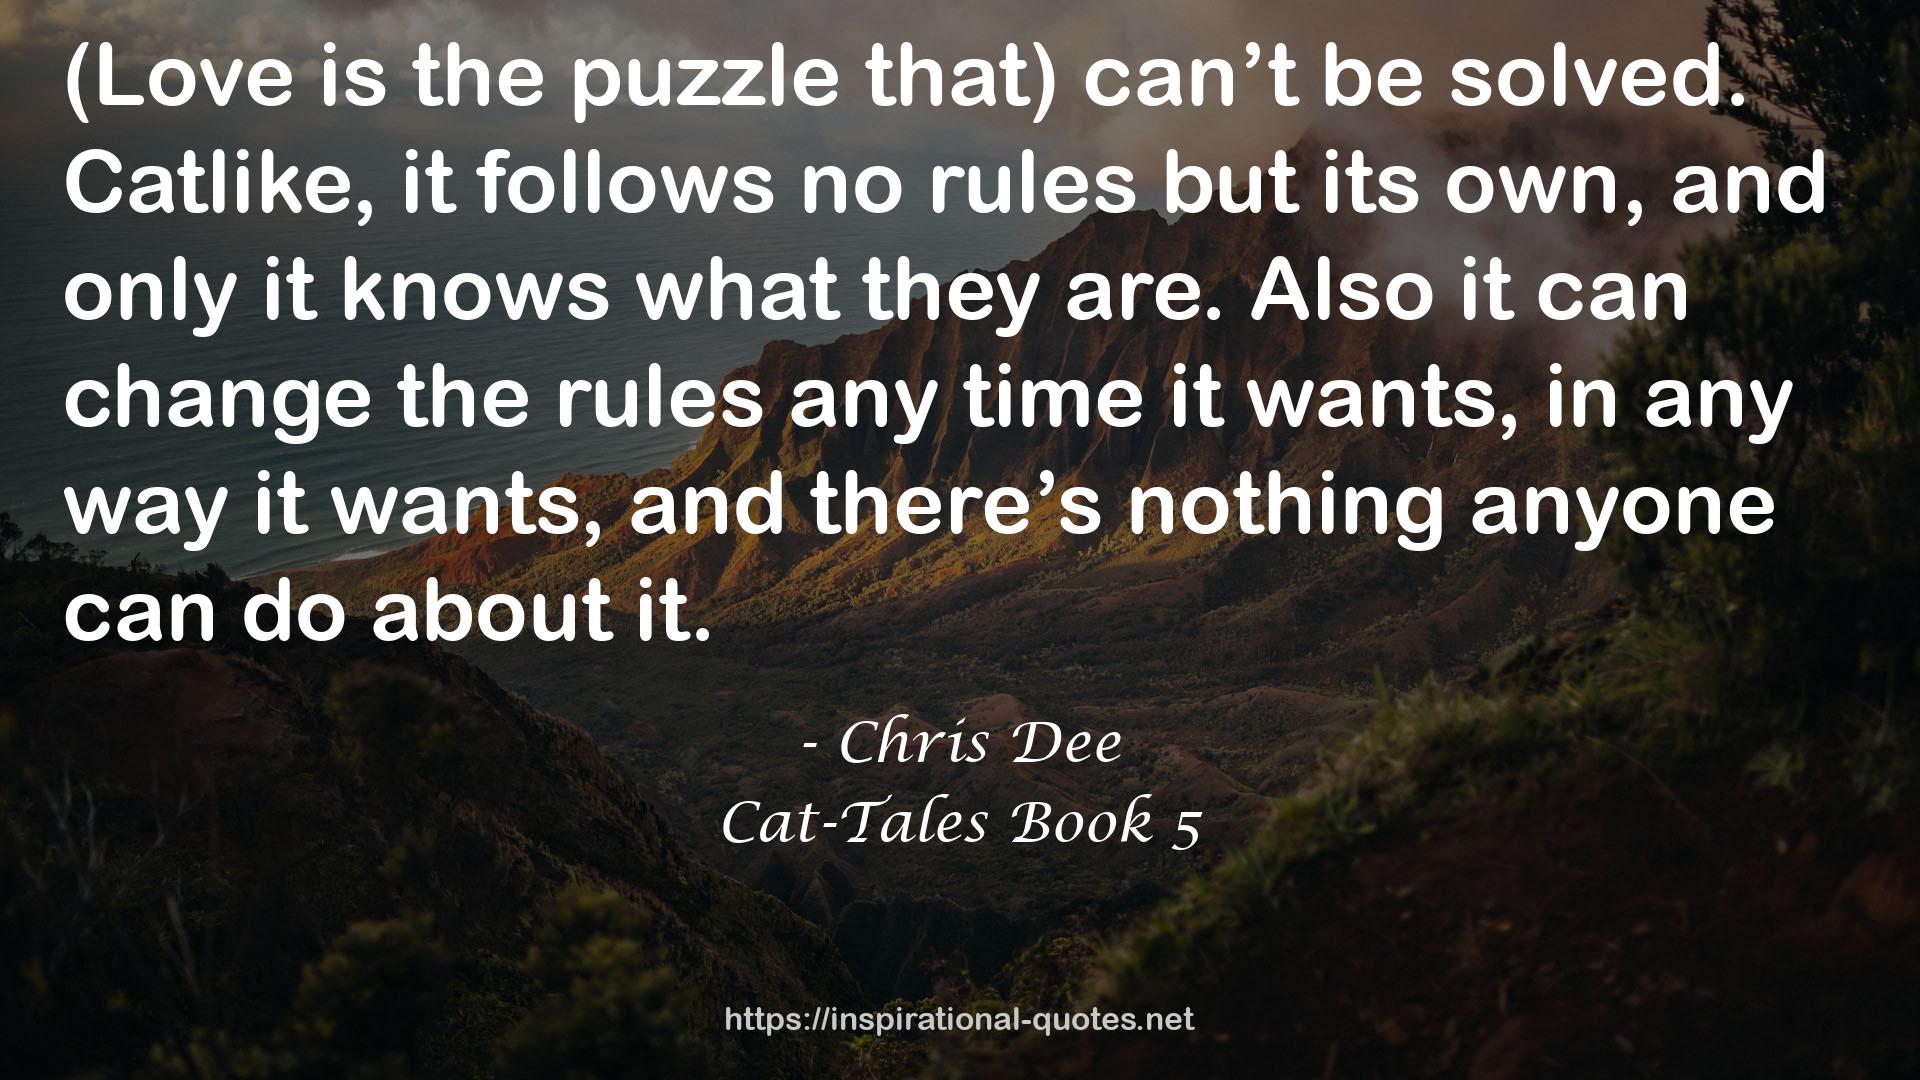 Cat-Tales Book 5 QUOTES